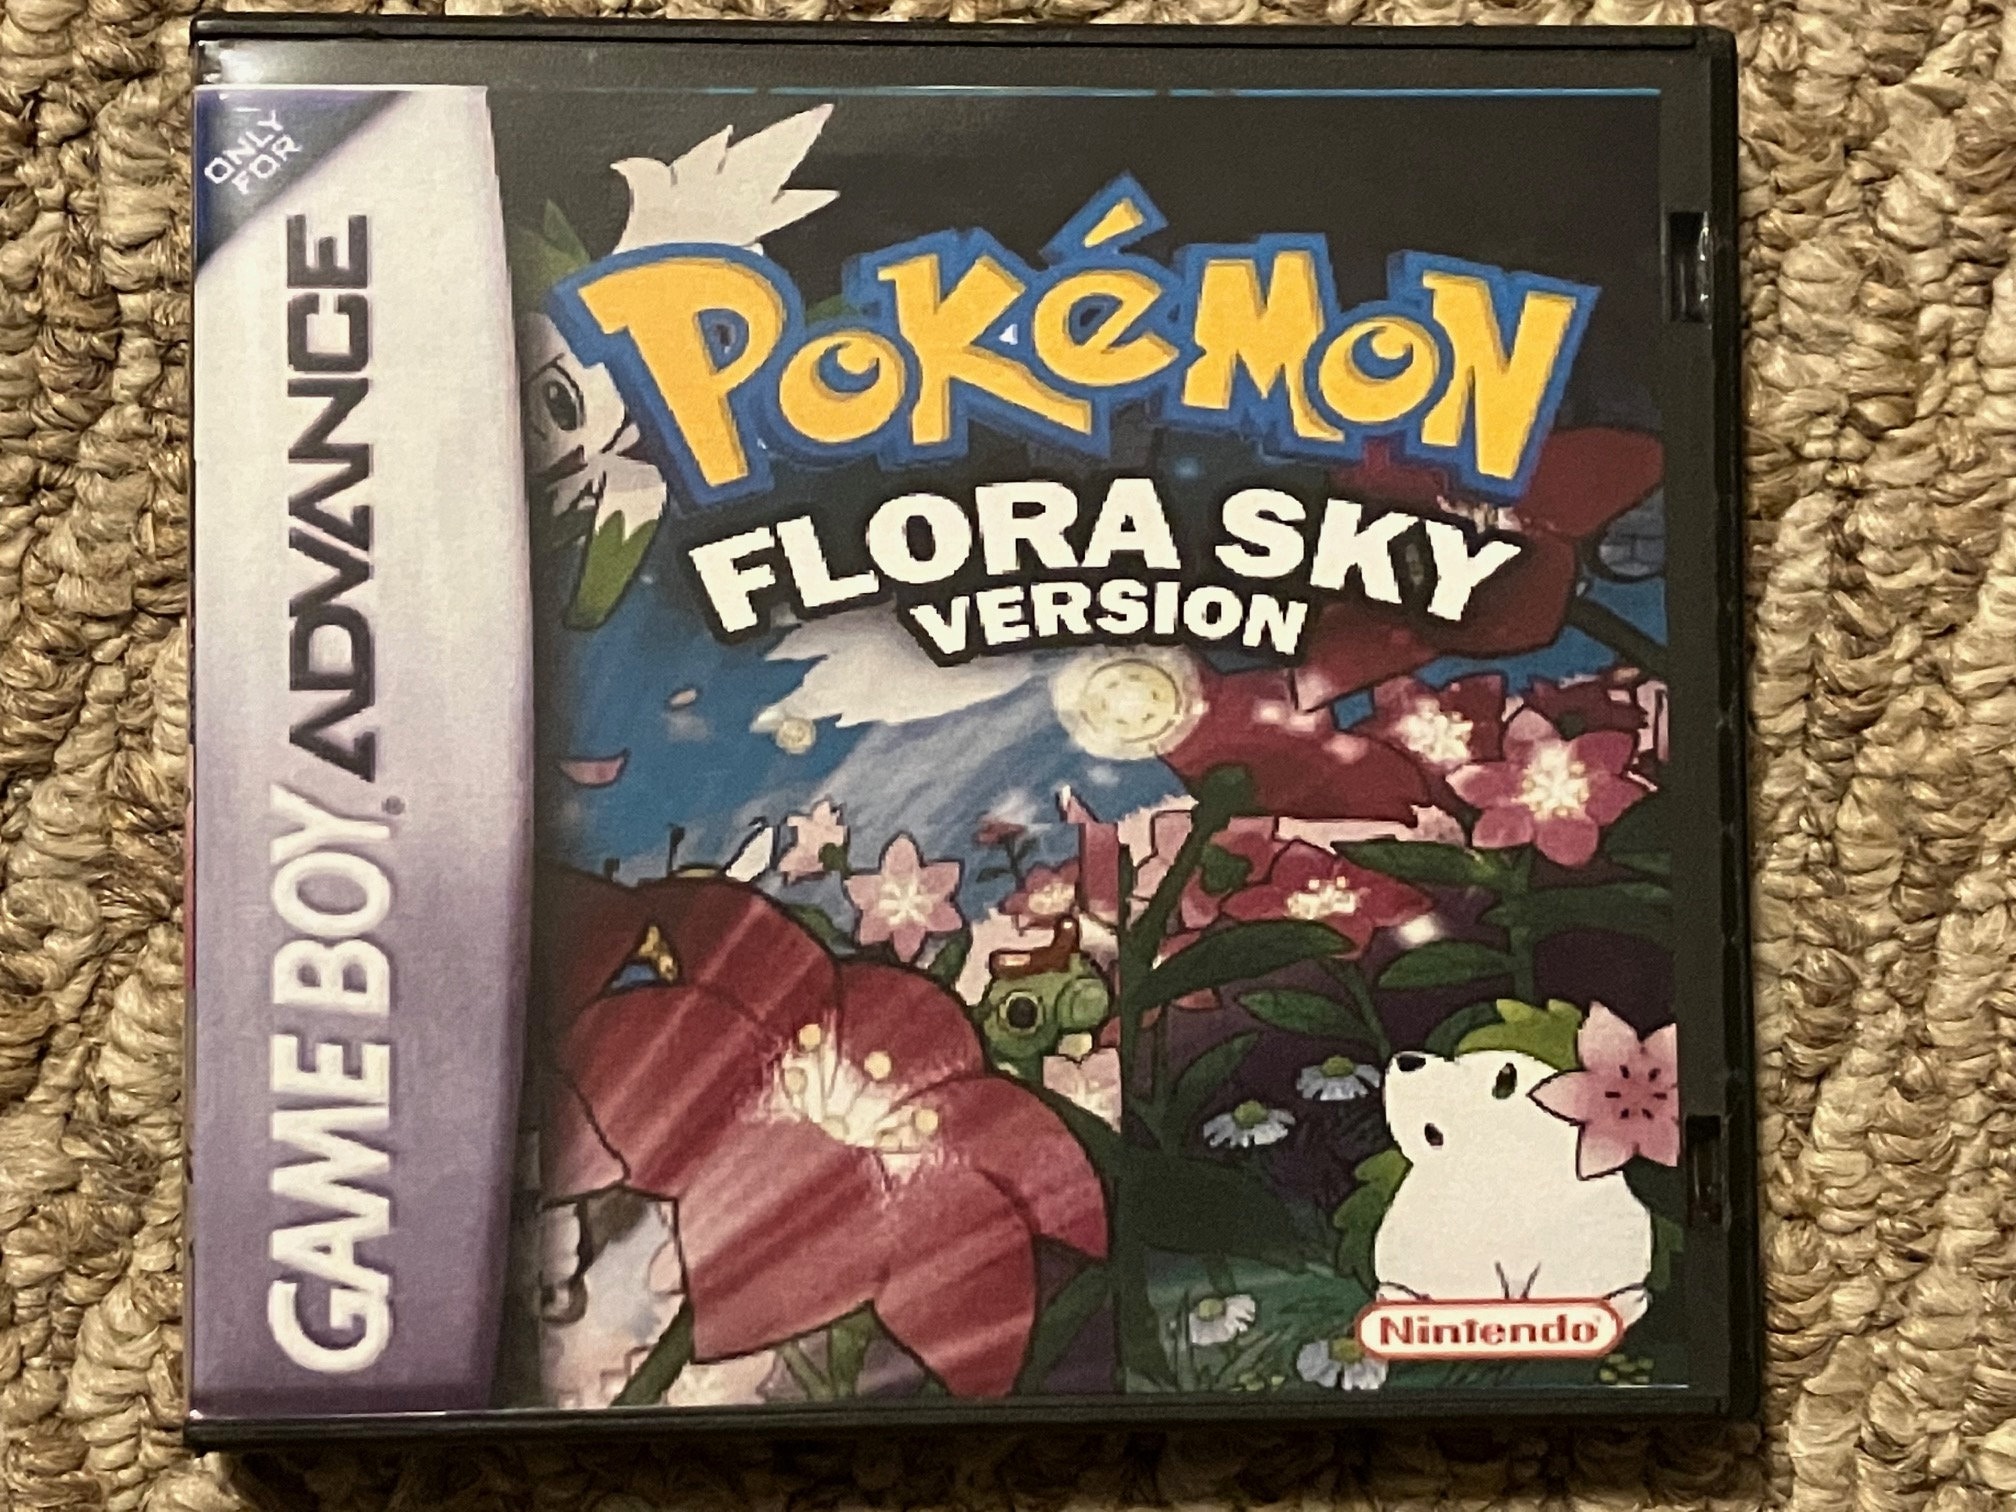 Pokémon SkyBlue GBA in ENGLISH  PokeMundo